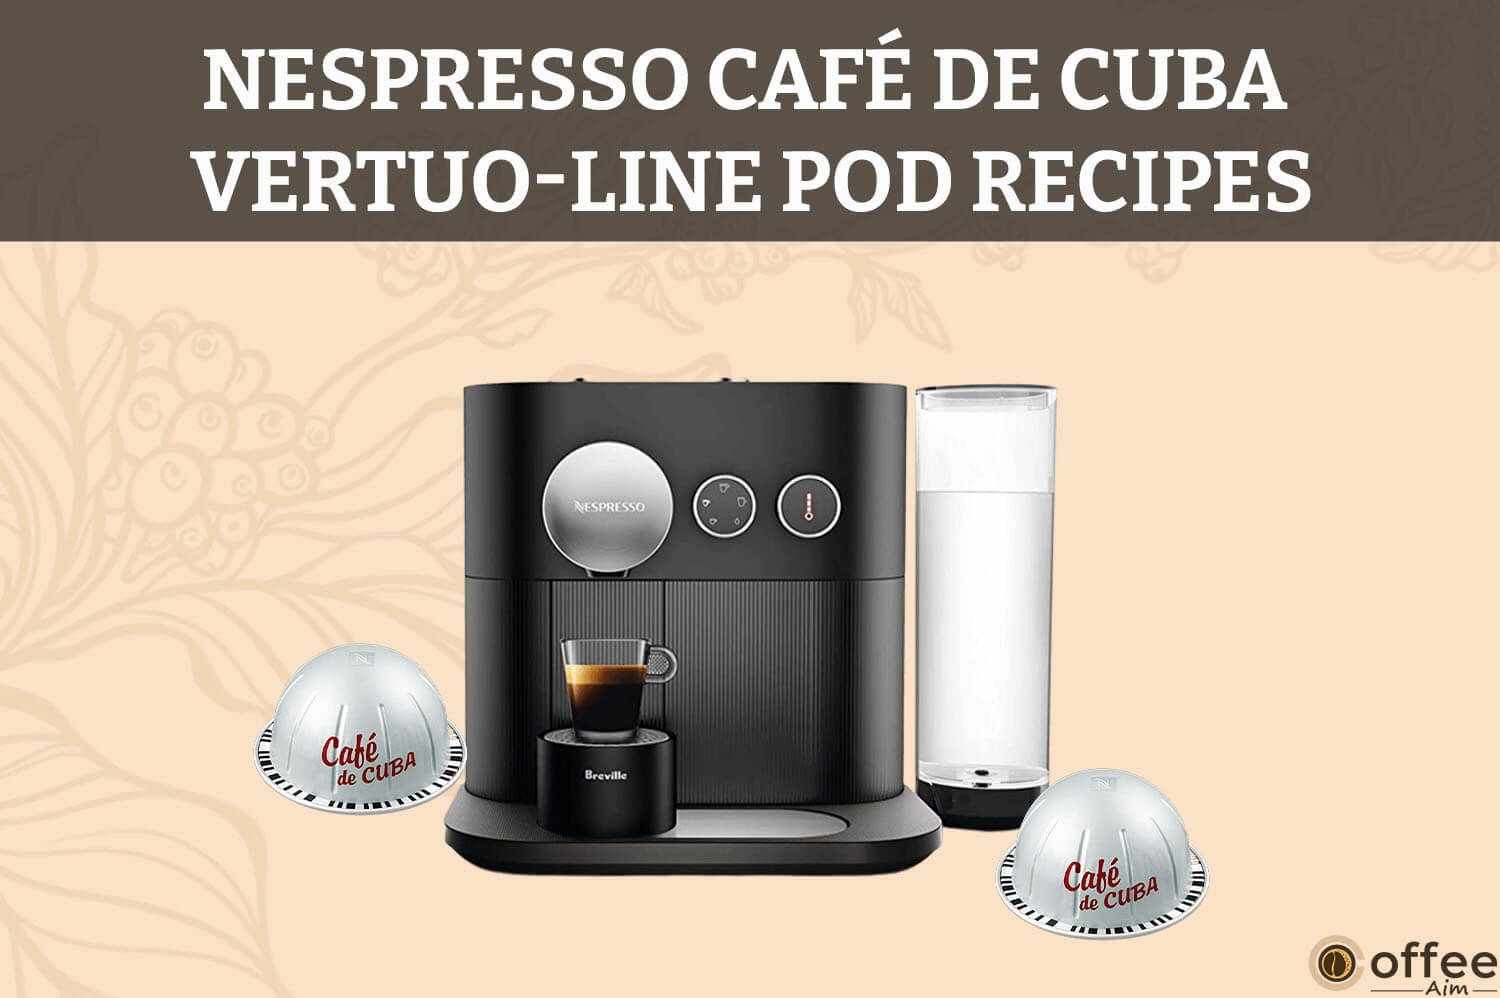 Featured image for the article "Nespresso Café de Cuba VertuoLine Pod Recipes"